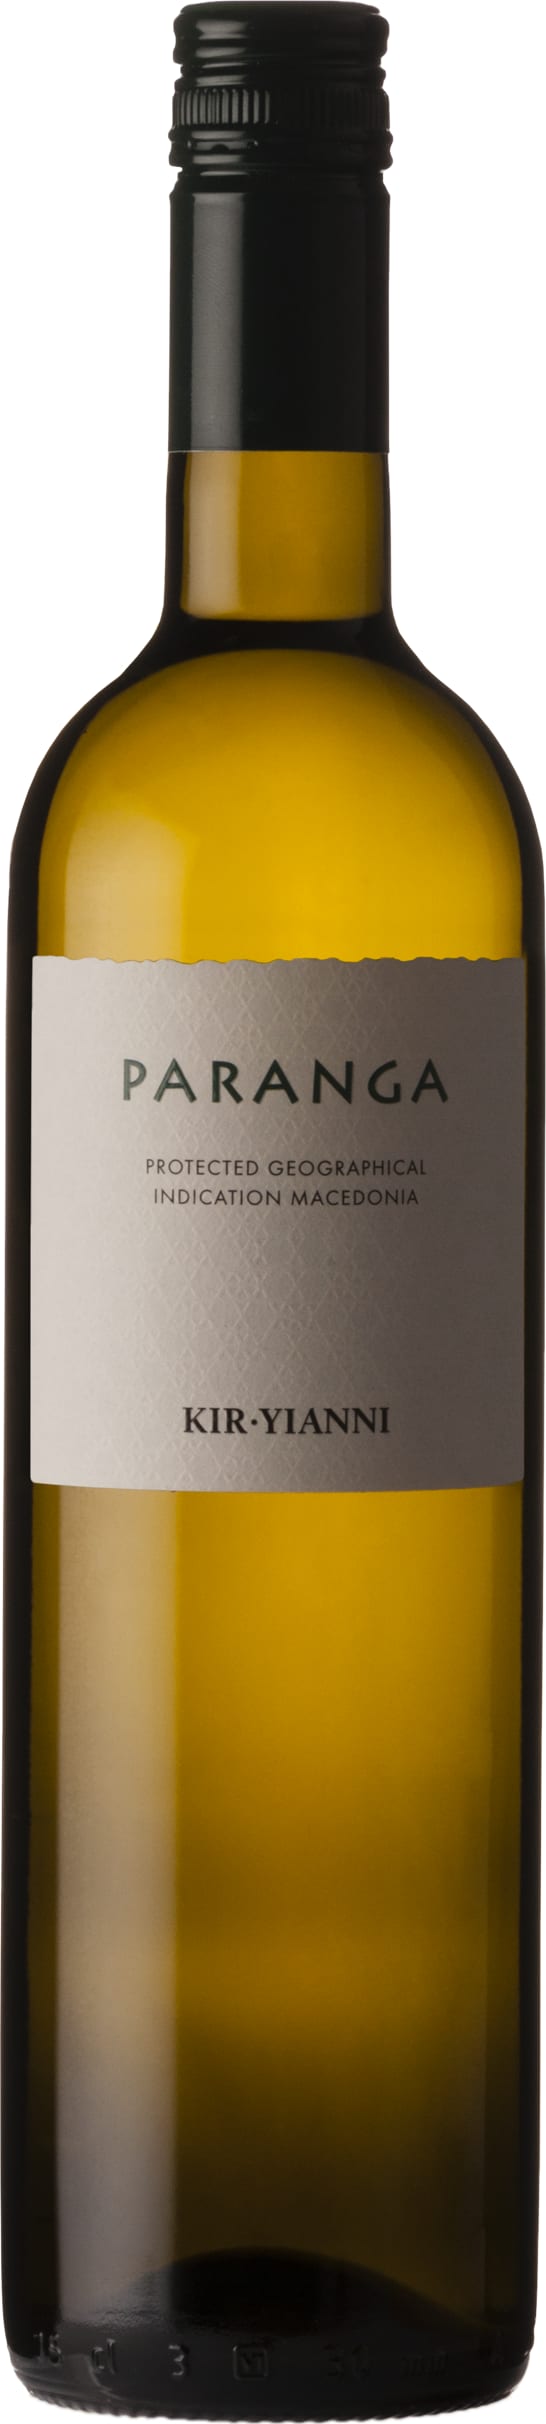 Kir-Yianni Paranga White 2023 75cl - Buy Kir-Yianni Wines from GREAT WINES DIRECT wine shop